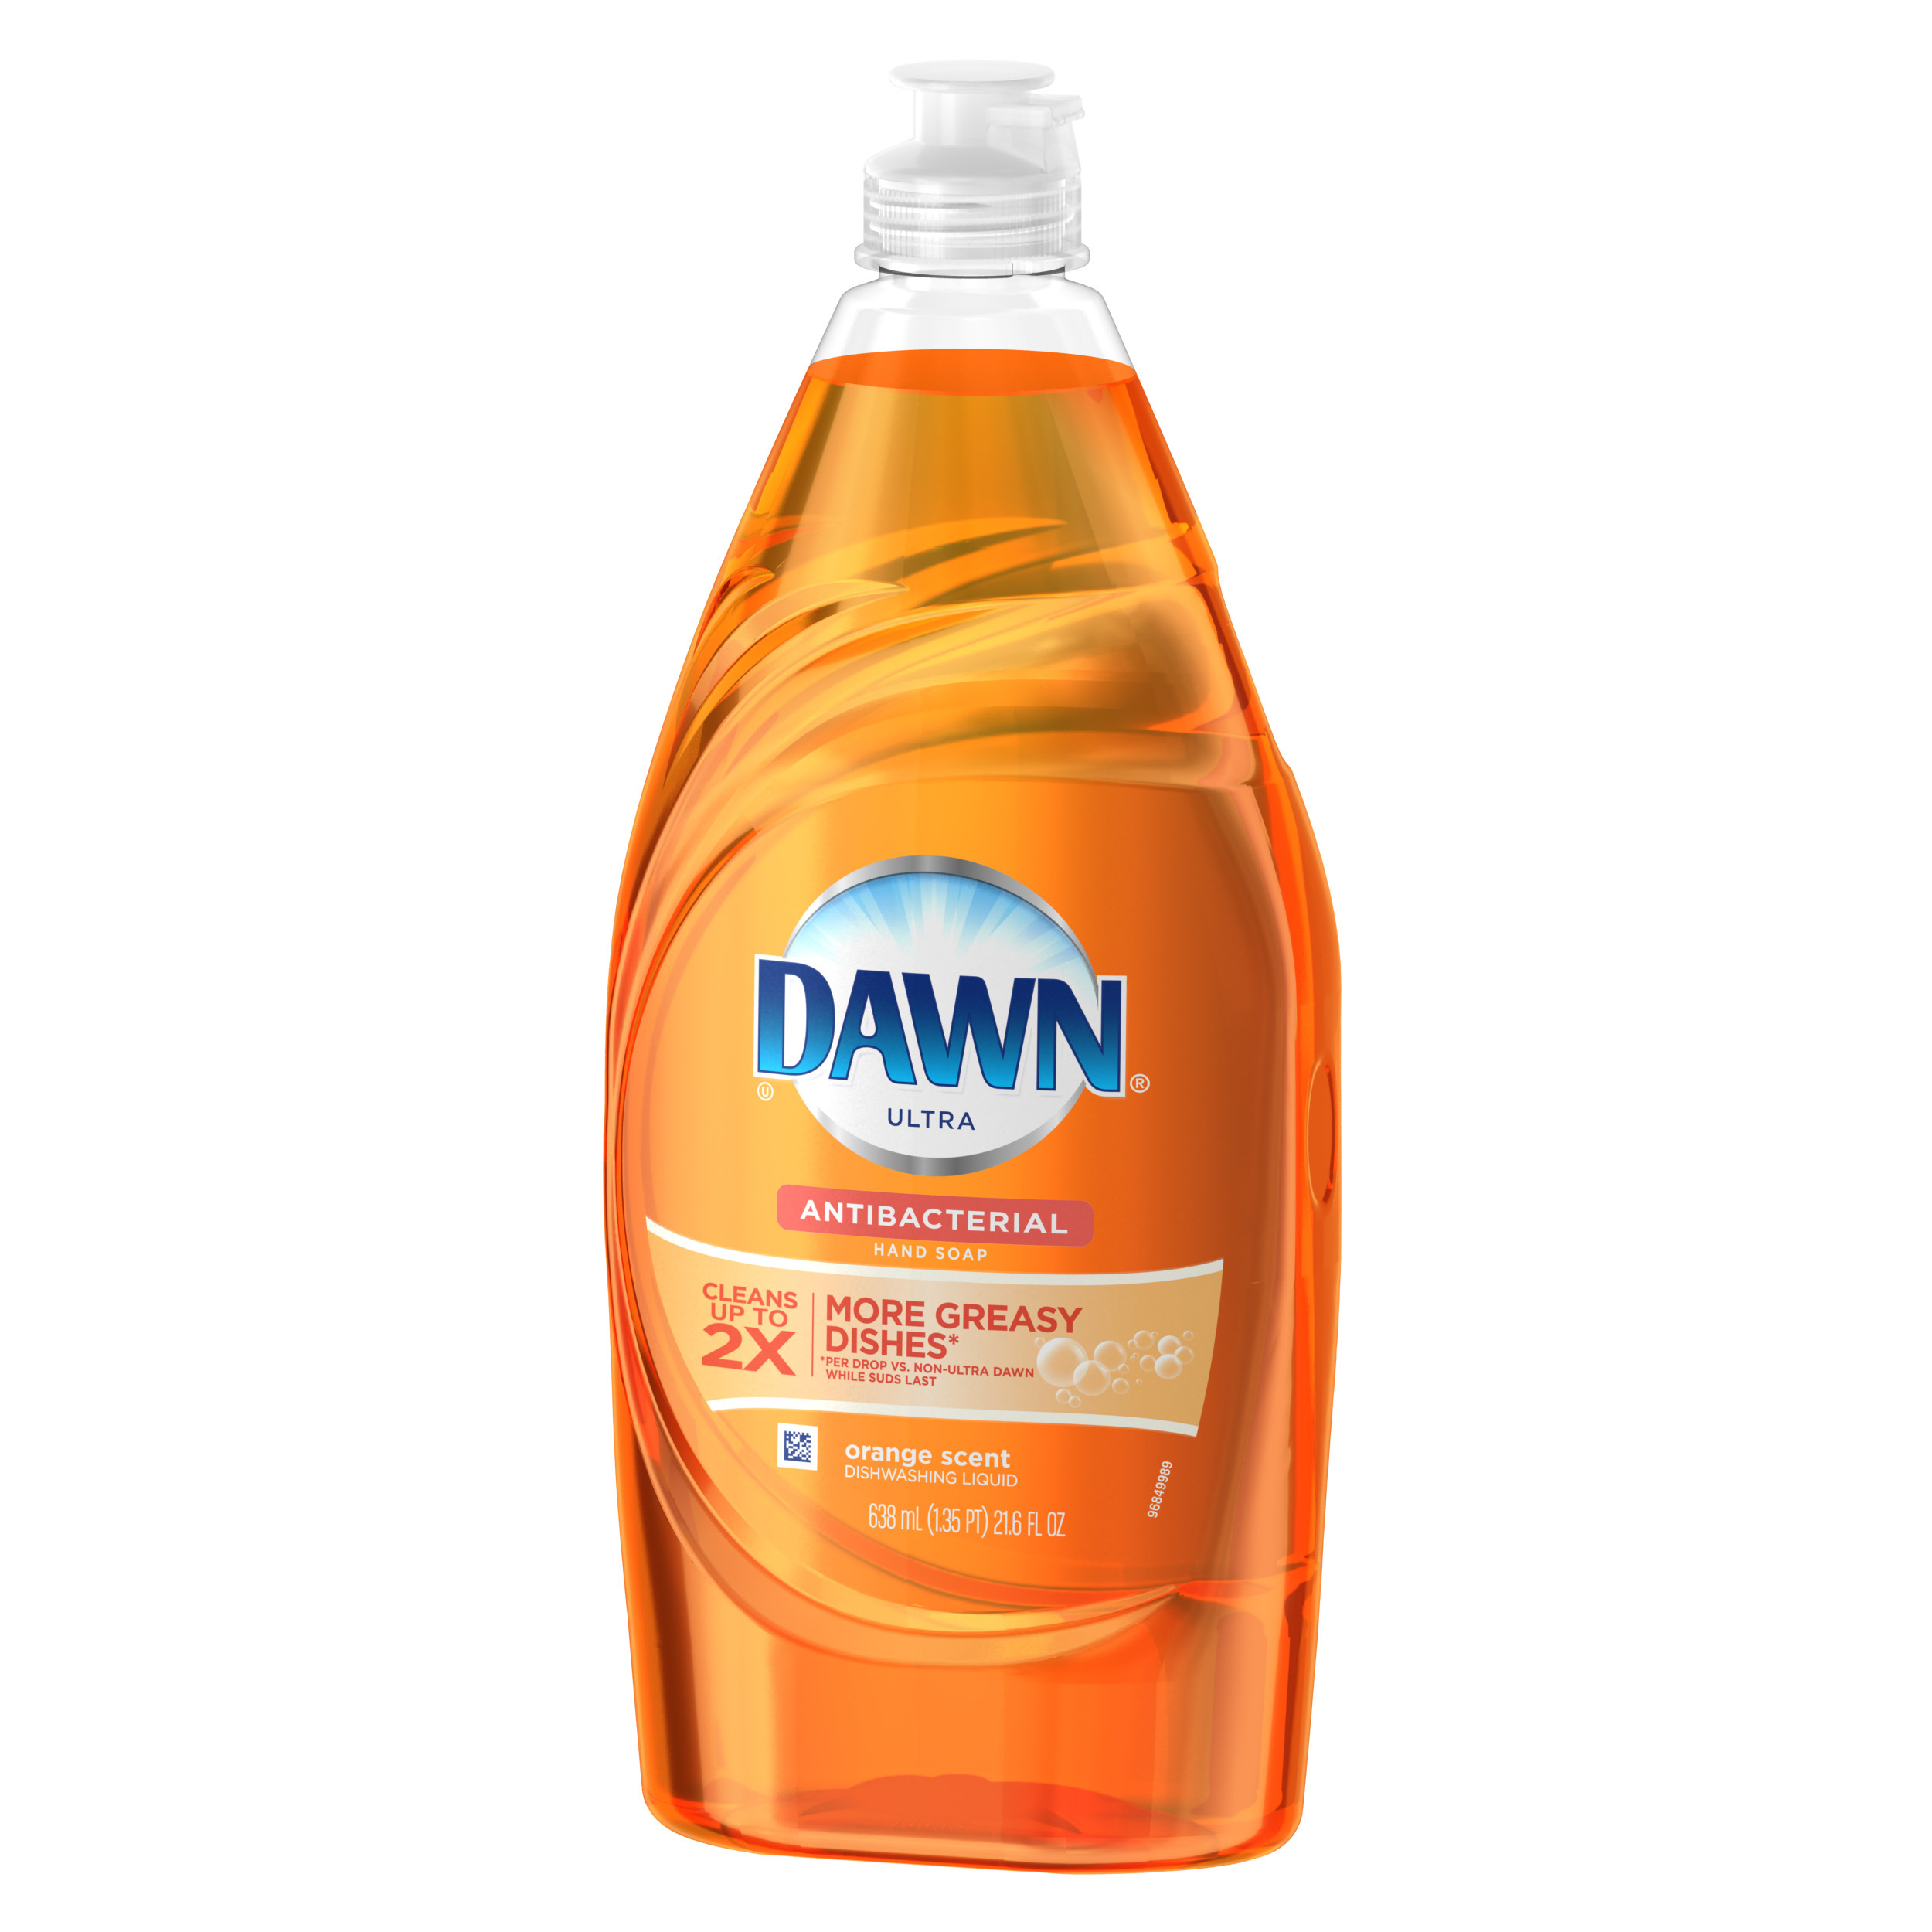 Dawn Ultra Antibacterial Dishwashing Liquid, Orange, 21.6 fl oz - image 5 of 8